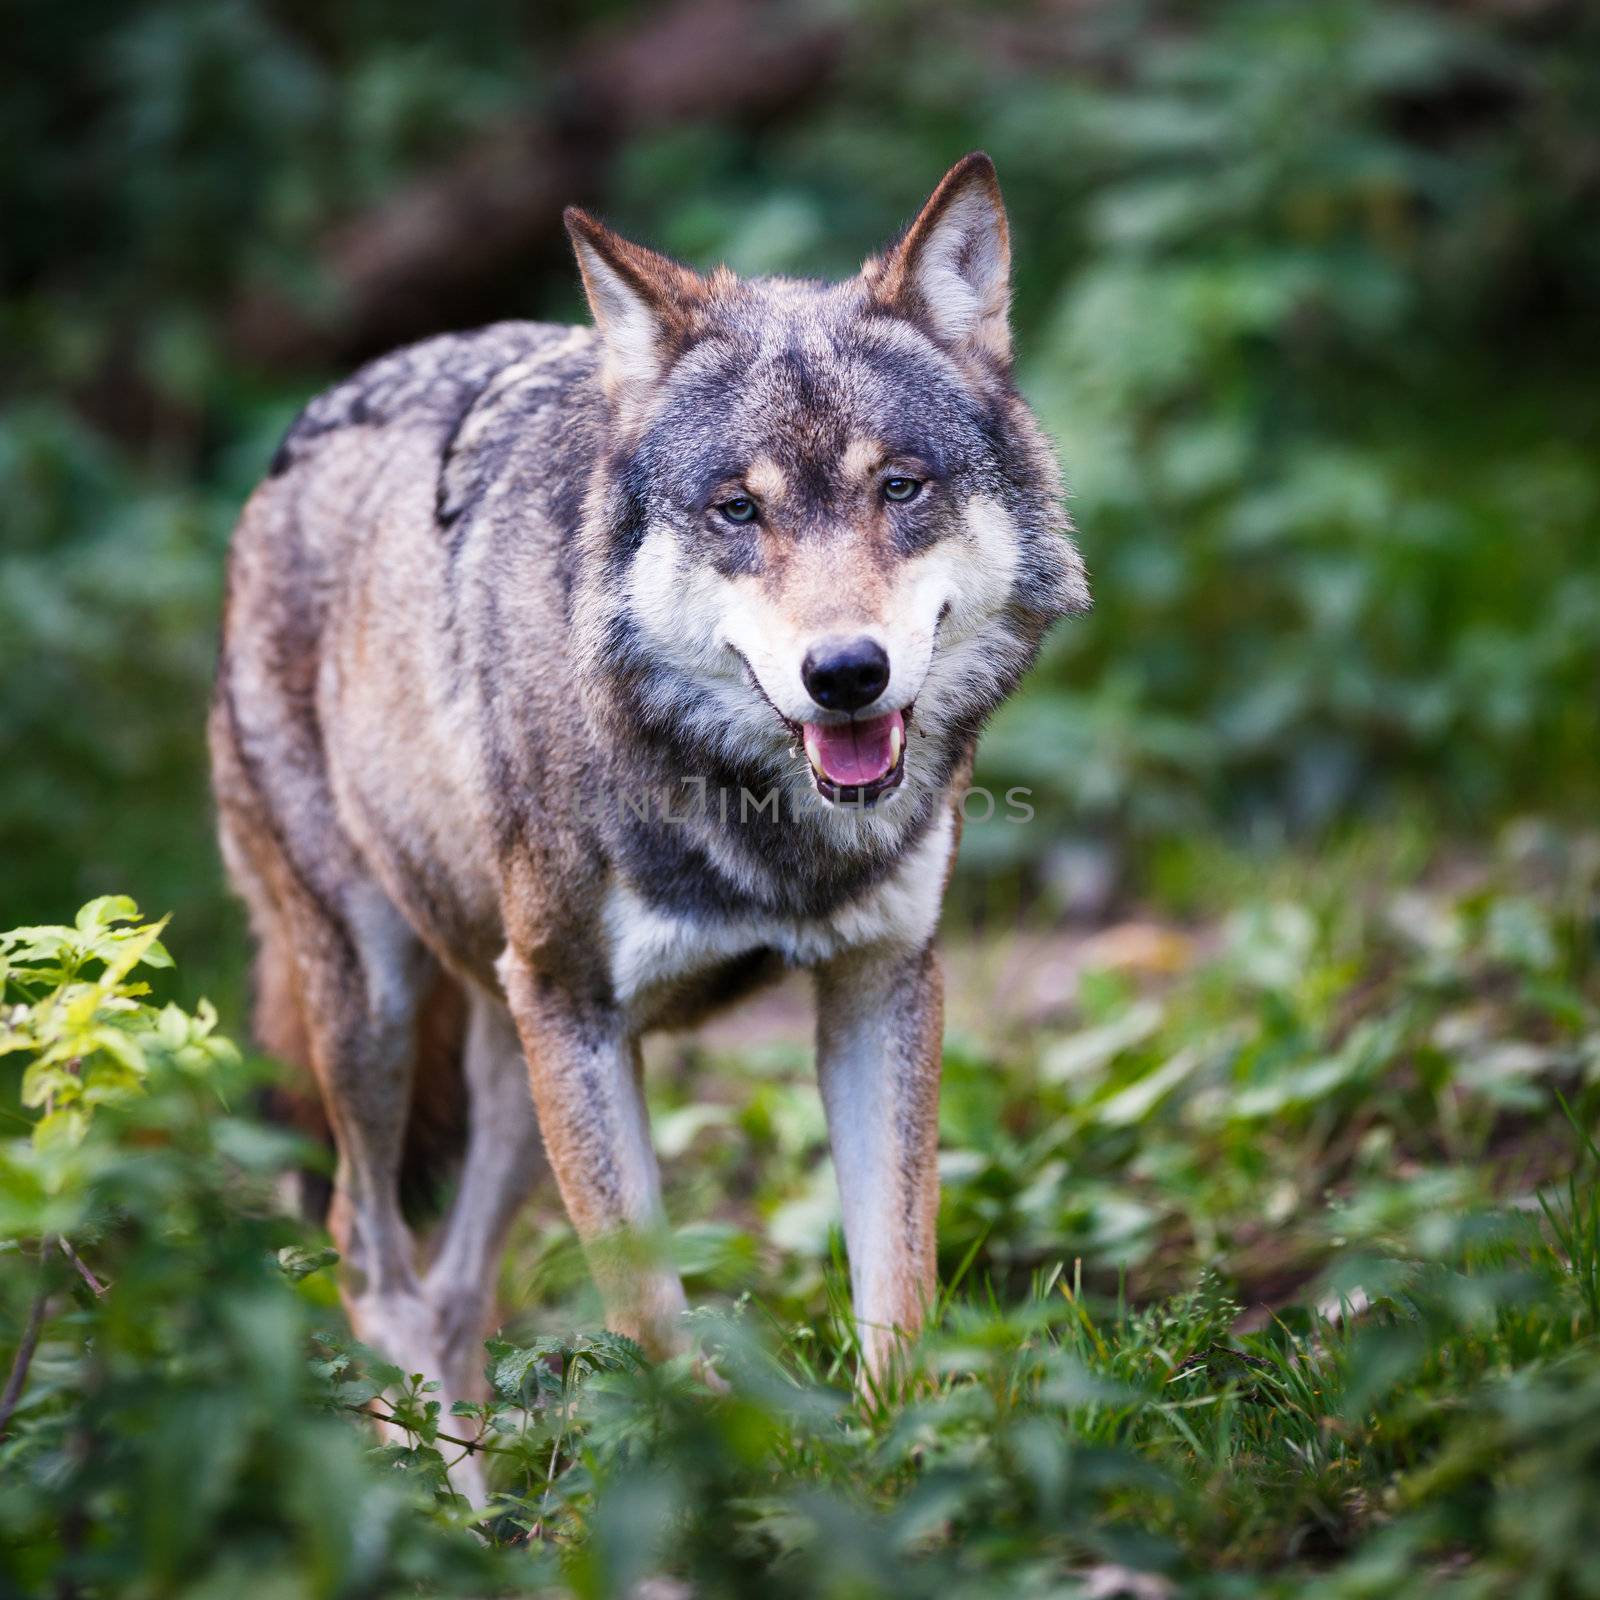 Gray/Eurasian wolf (Canis lupus) by viktor_cap